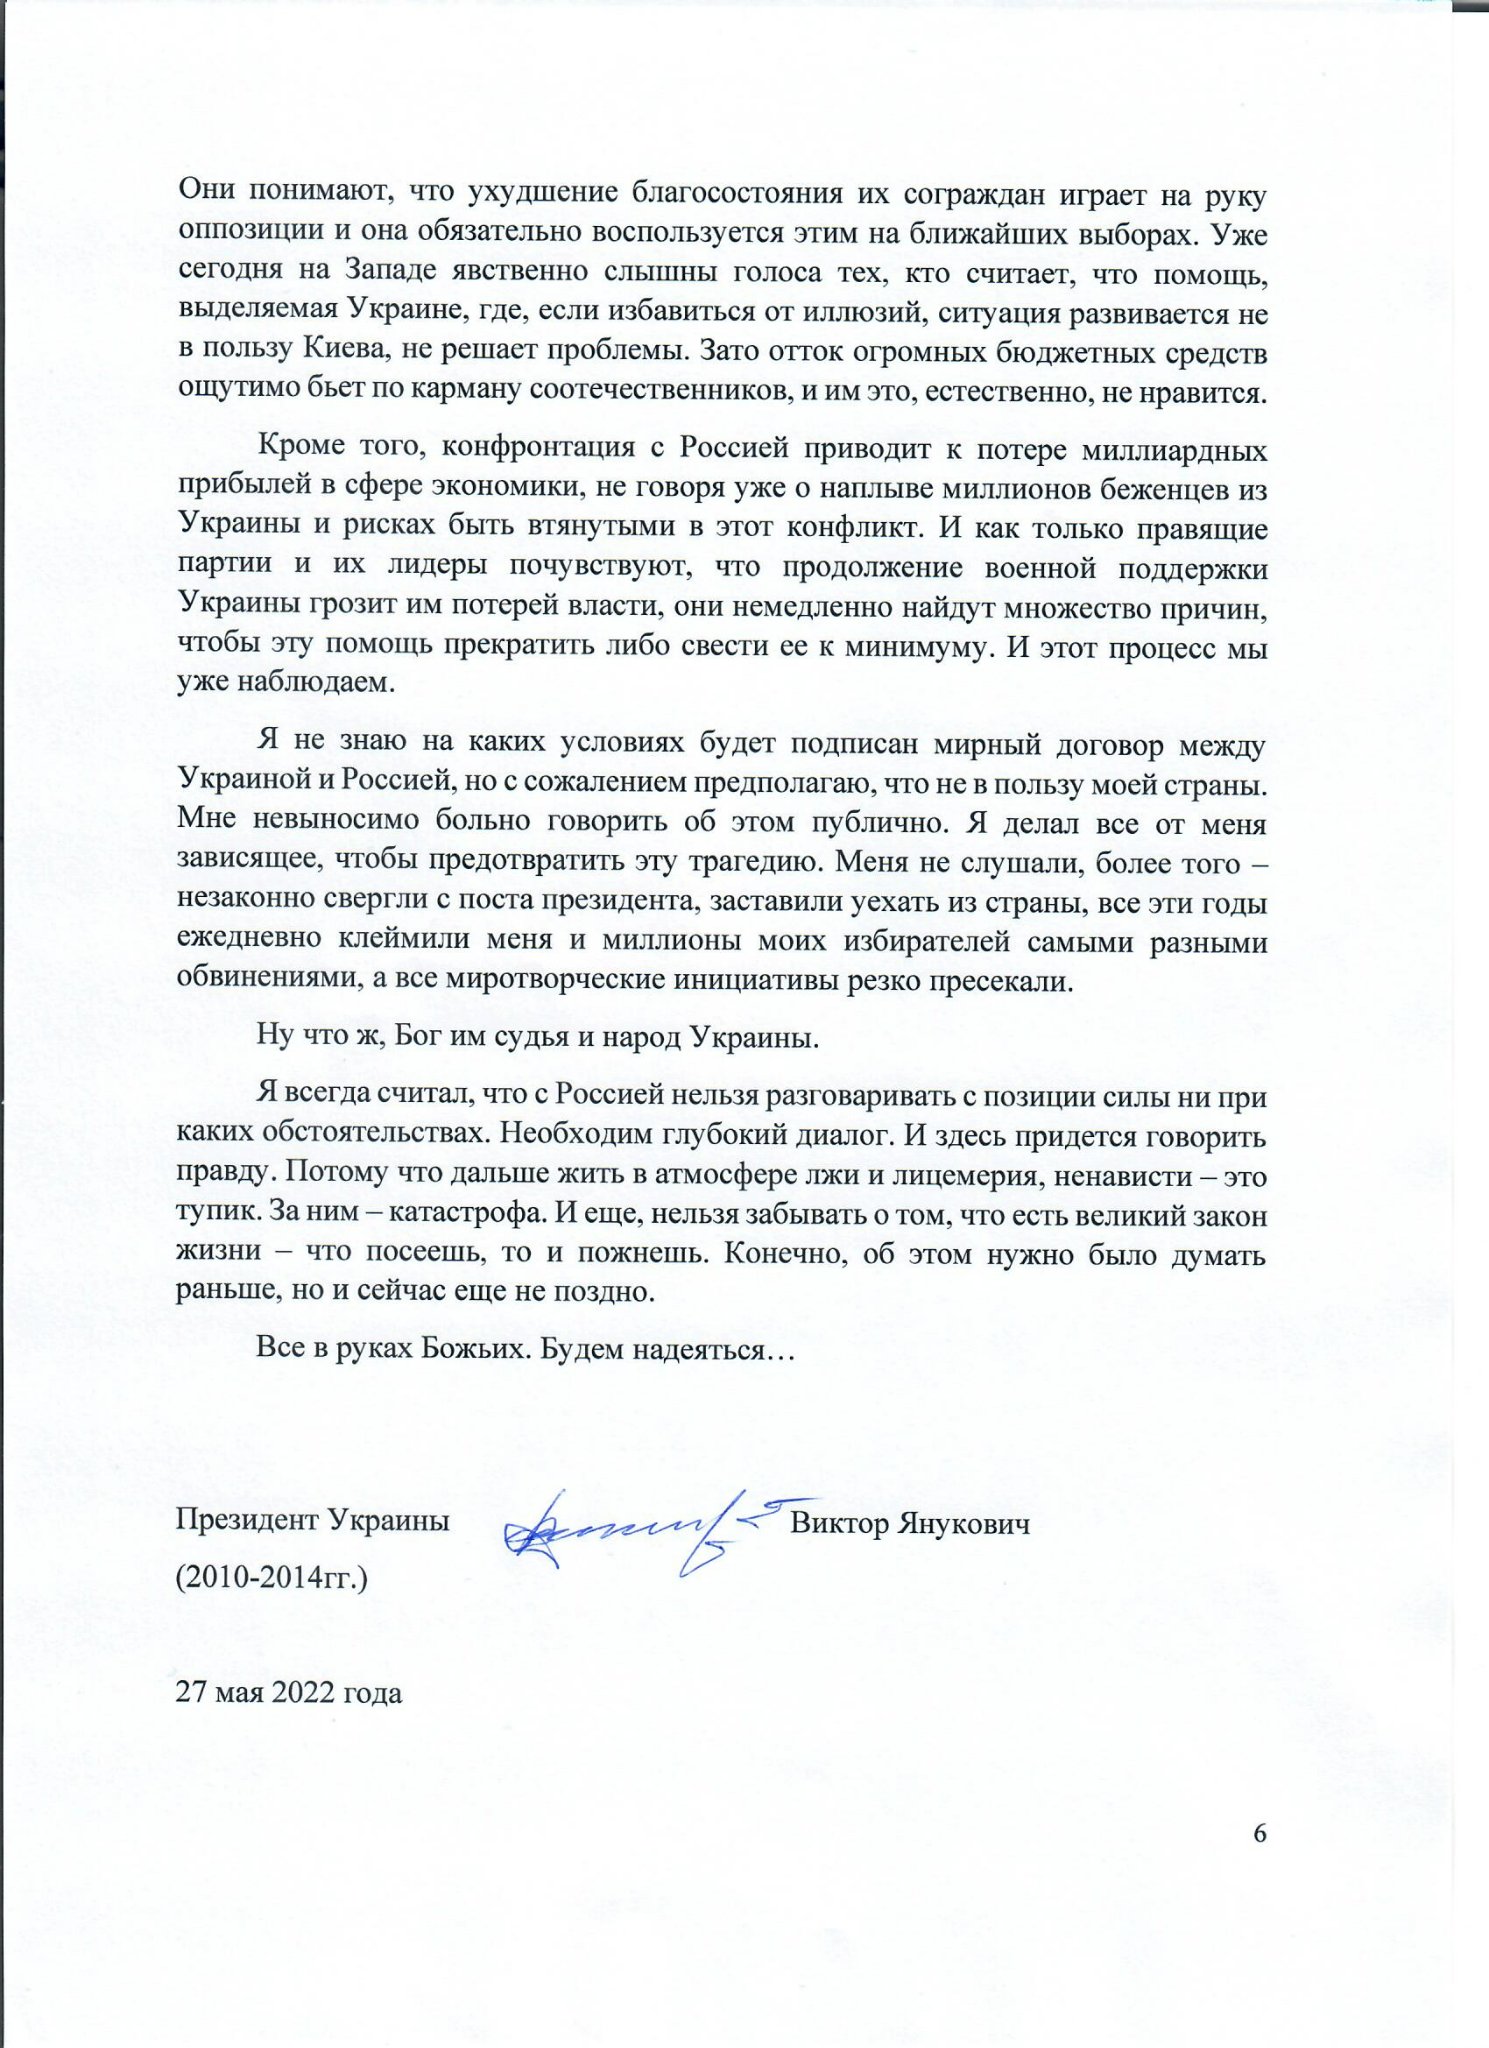 Обращение экс-президента Украины Виктора Януковича